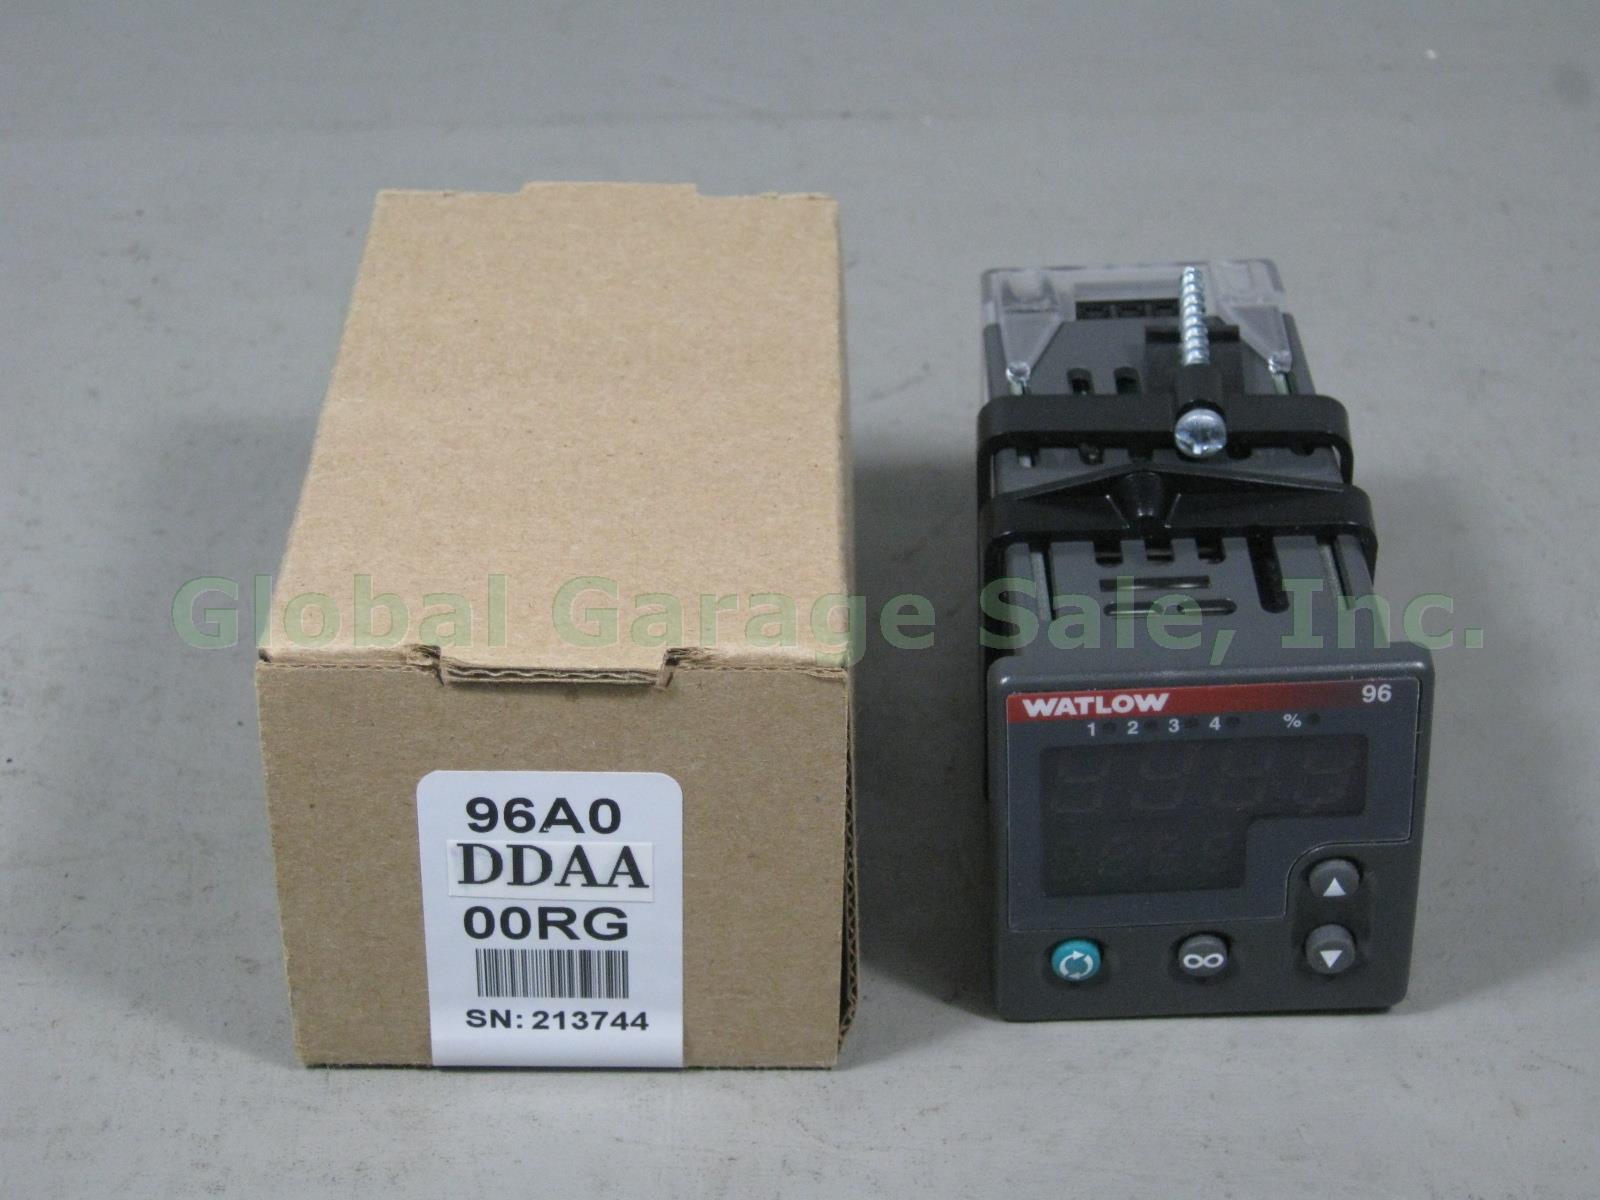 New Watlow 96A0 DDAA 00RG Series 96 1/16 DIN Dual Display Temperature Controller